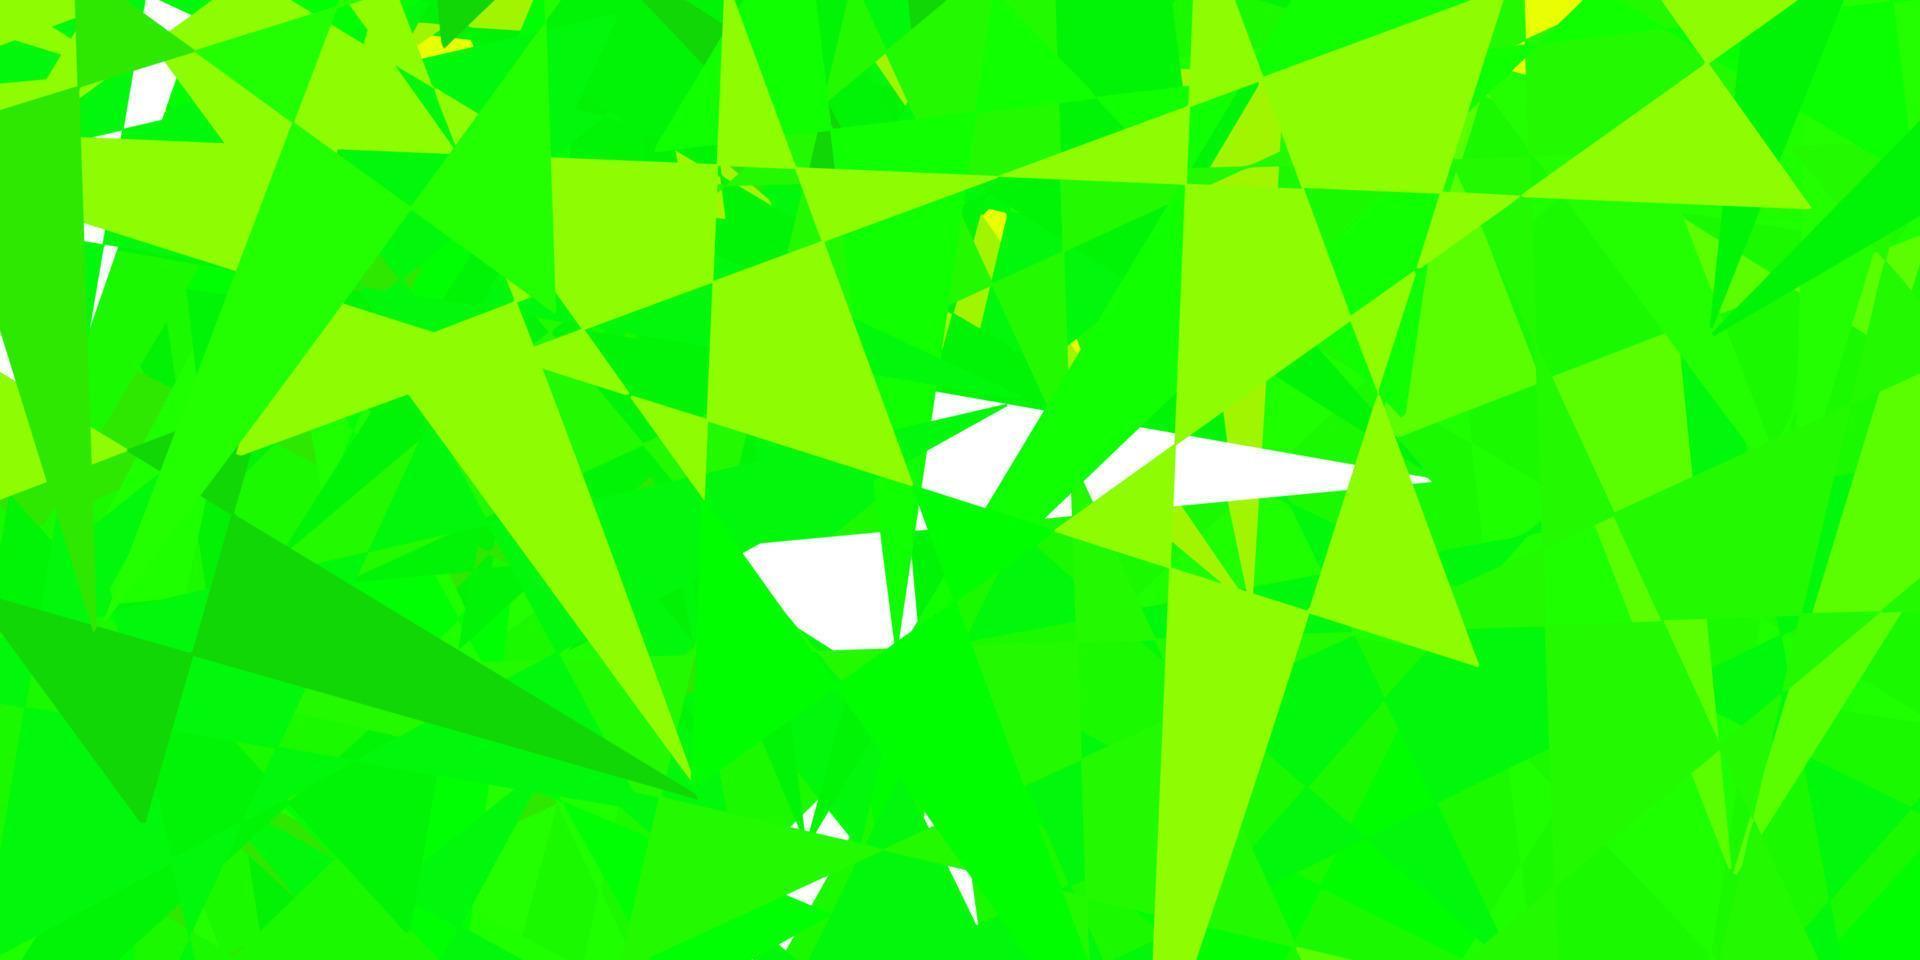 plantilla de vector azul oscuro, verde con formas triangulares.